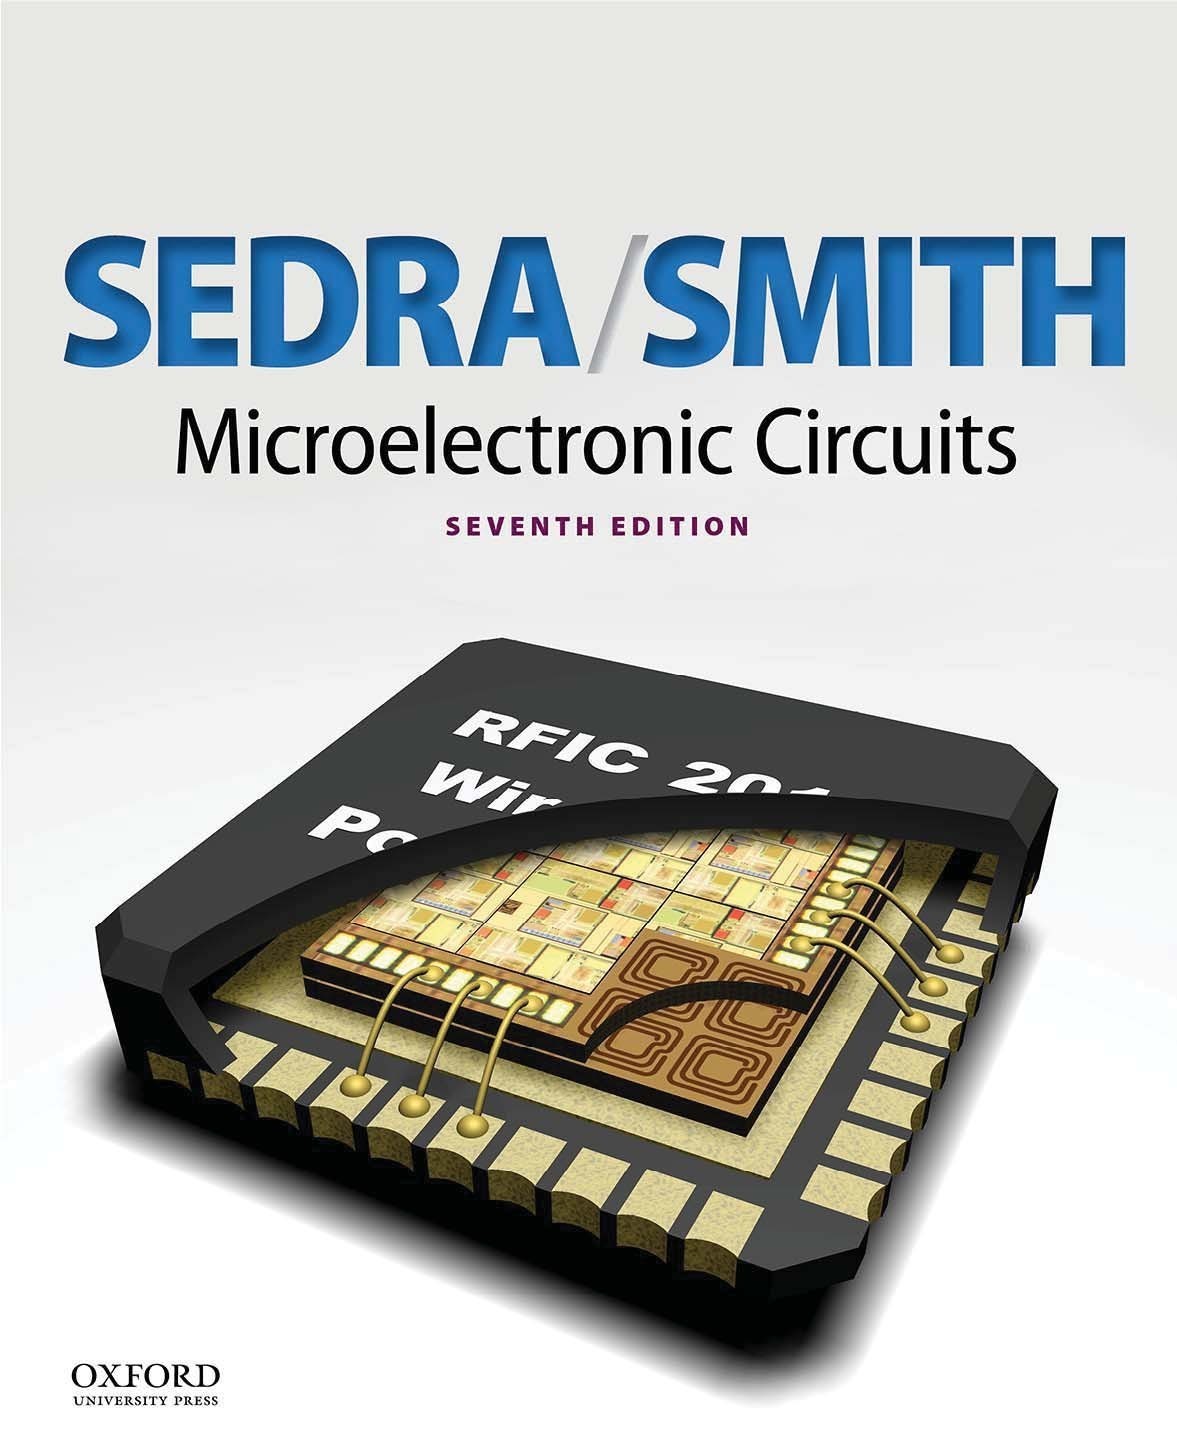 Sedra smith microelectronic circuits 6th edition